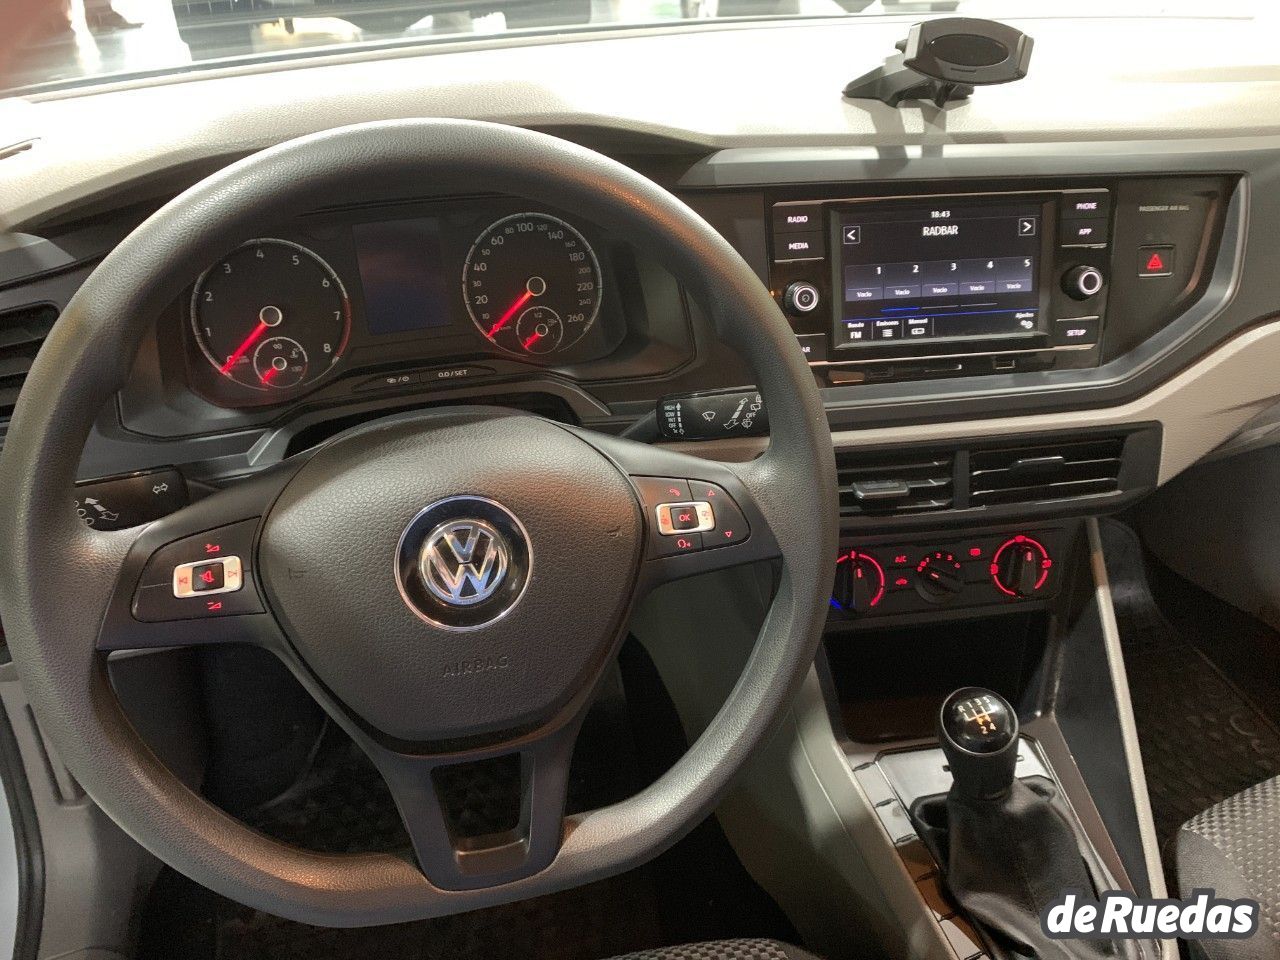 Volkswagen Polo Usado en Córdoba, deRuedas